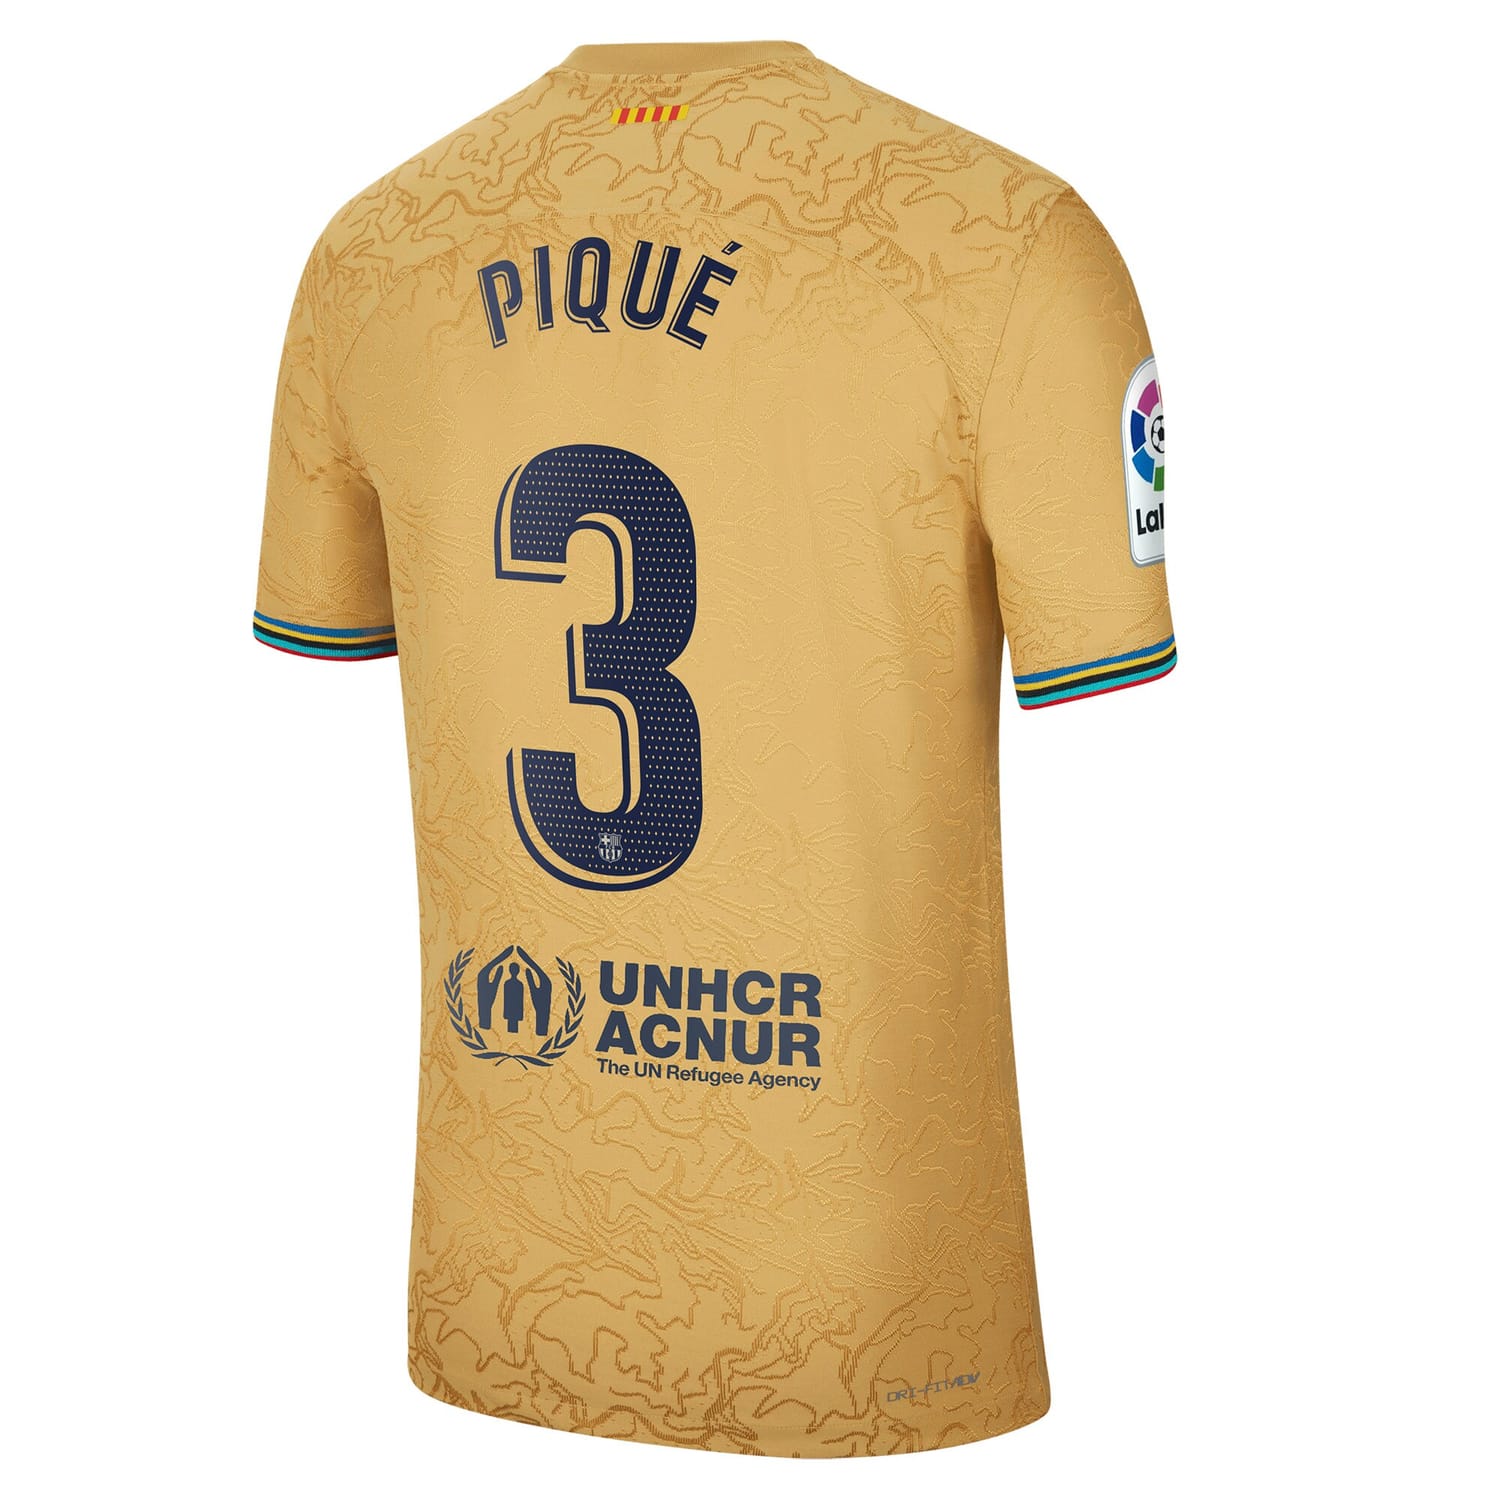 La Liga Barcelona Away Authentic Jersey Shirt Gold 2022-23 player Gerard Pique printing for Men